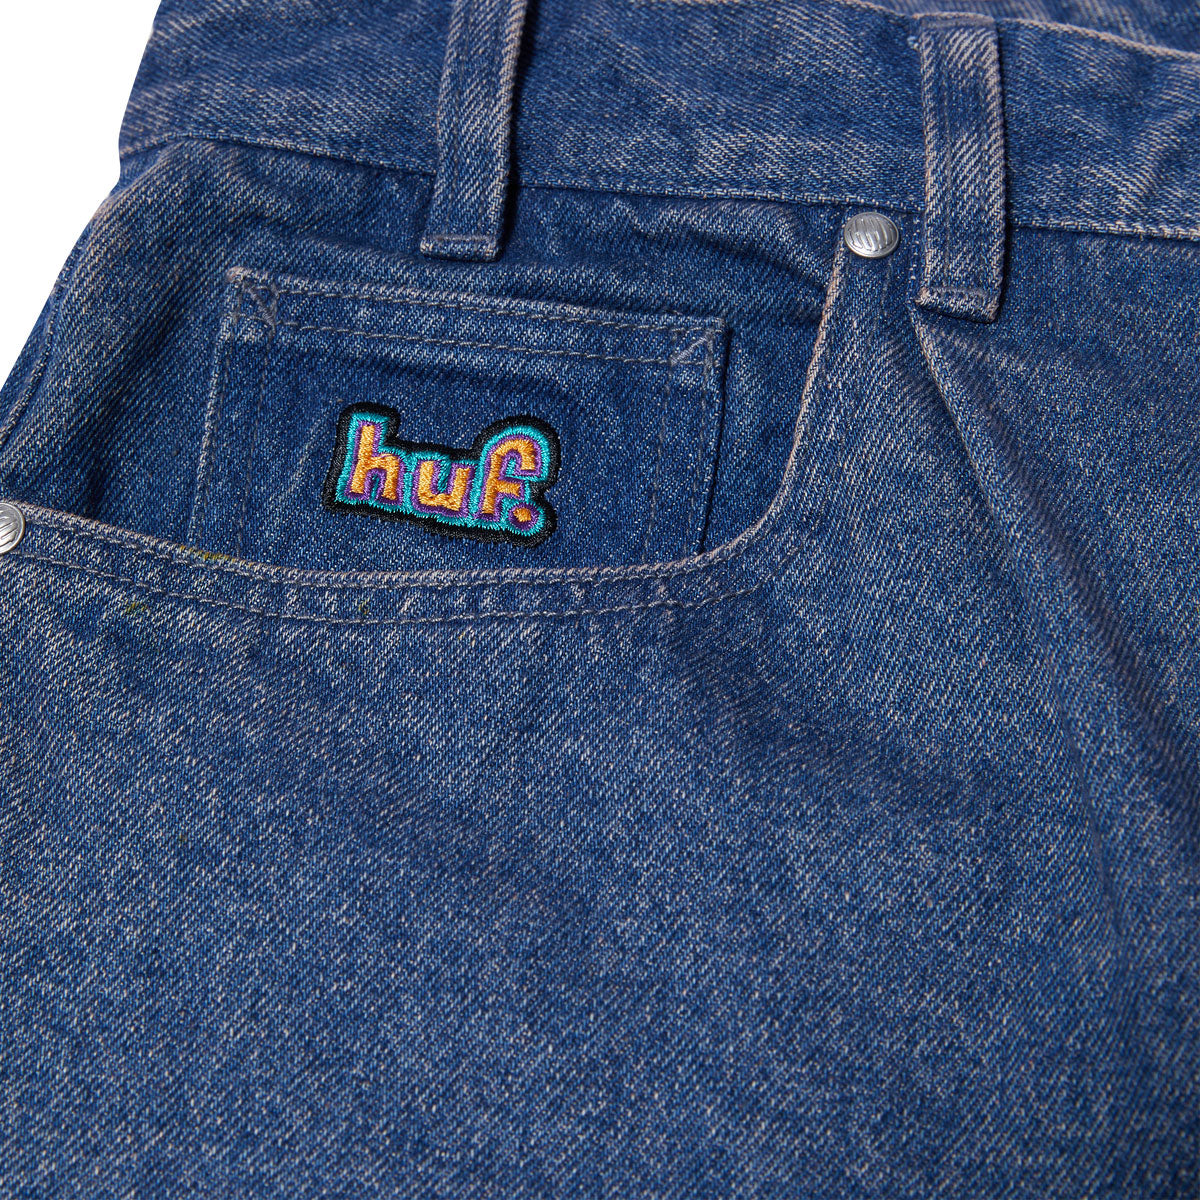 HUF Cromer Washed Pants - Blue Night image 3